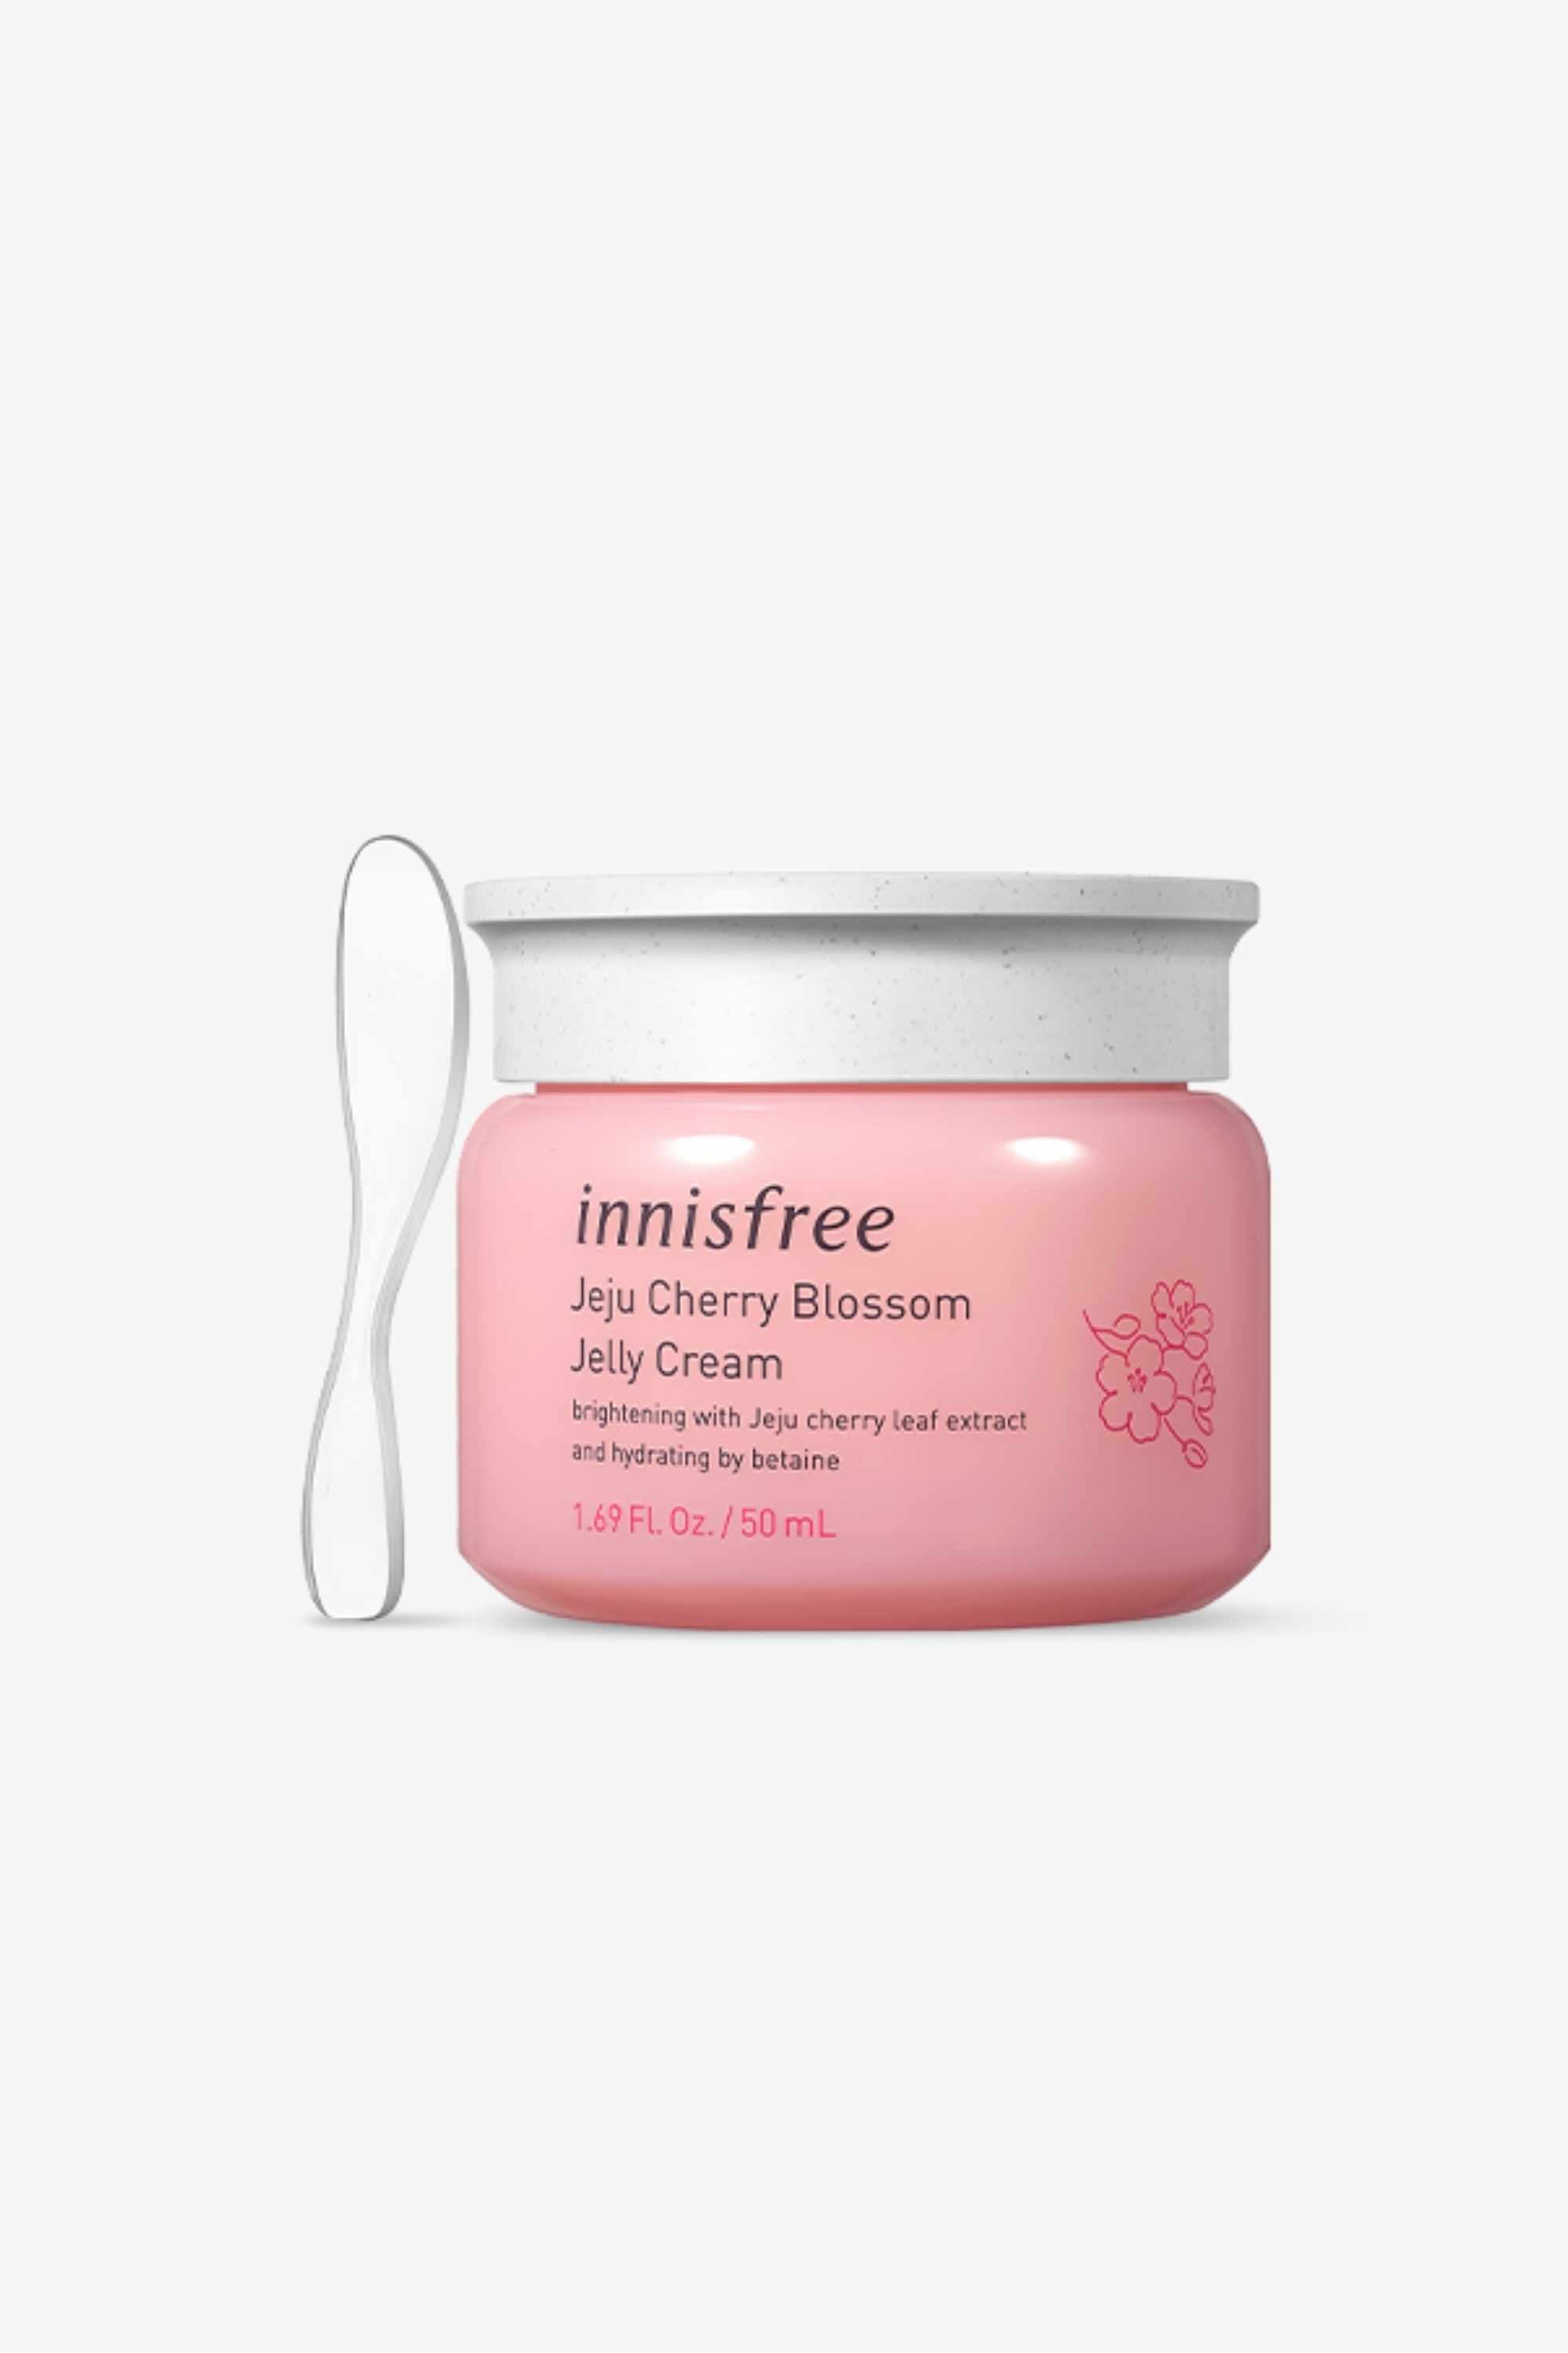 innisfree - Cherry Blossom Jelly Cream - 50ml